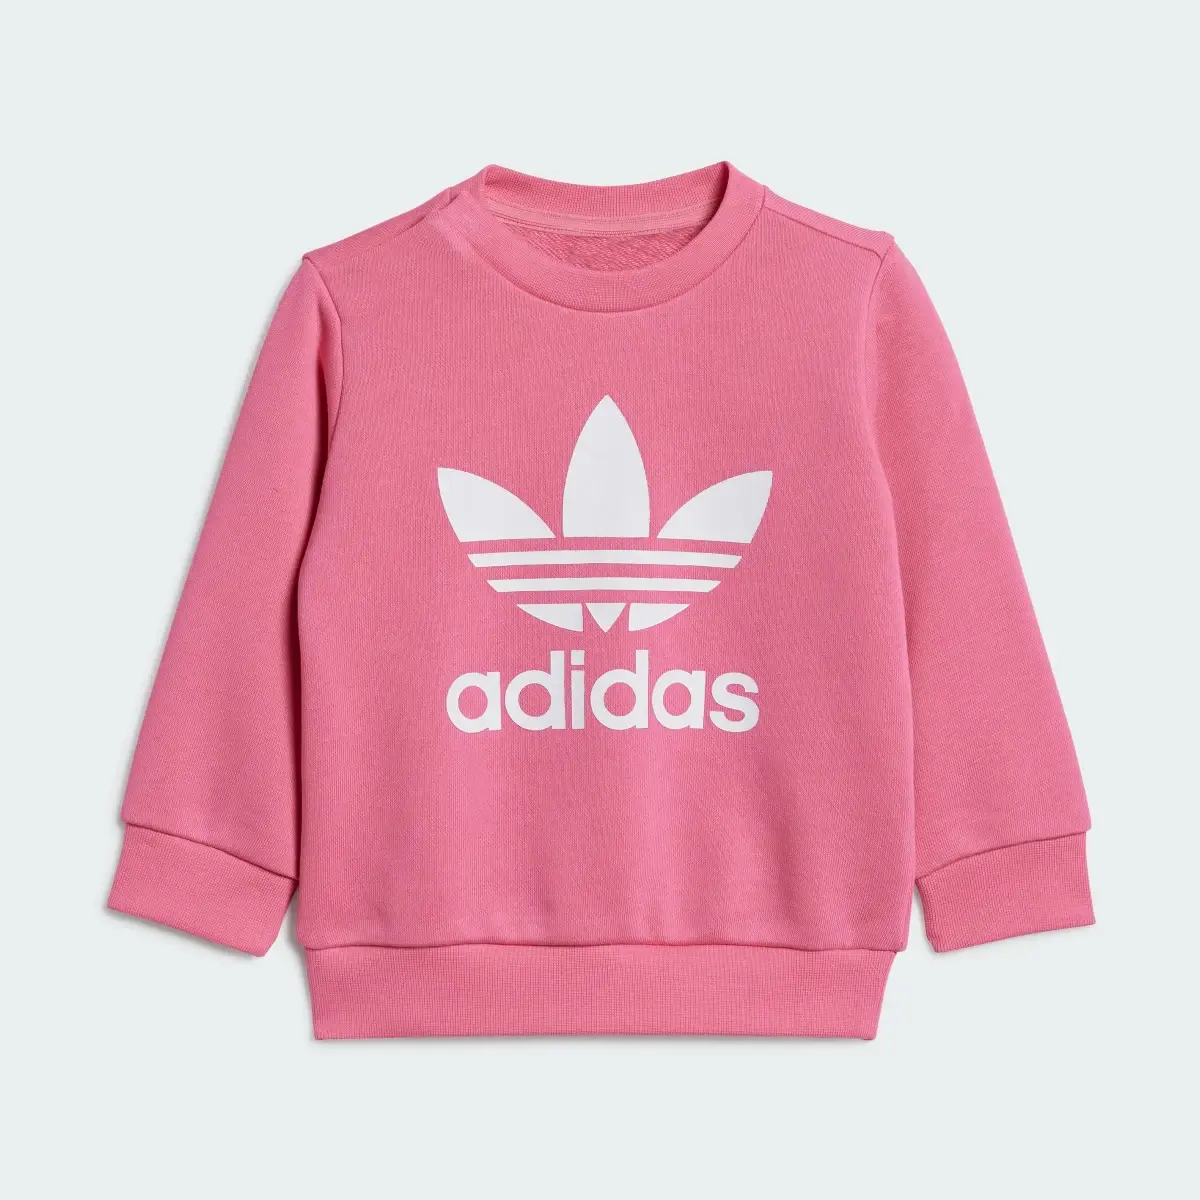 Adidas Tuta Crew Sweatshirt. 3